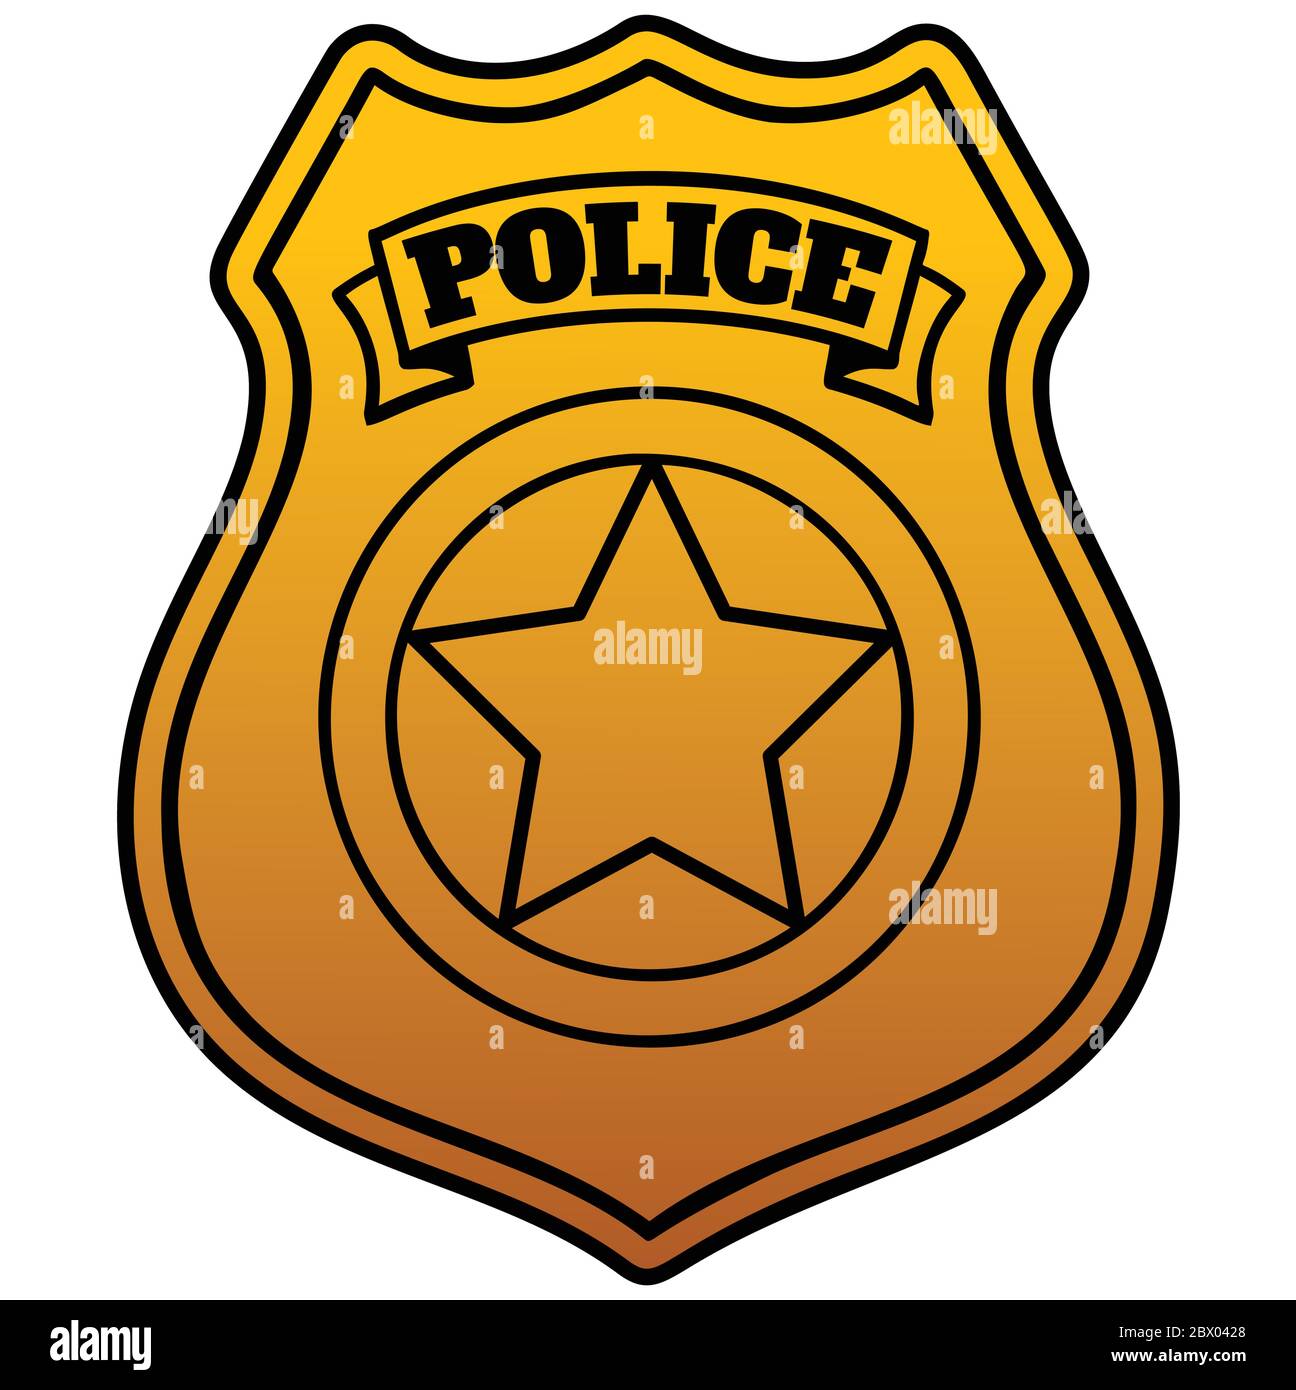 Insigne de police - Illustration d'un insigne de police Image